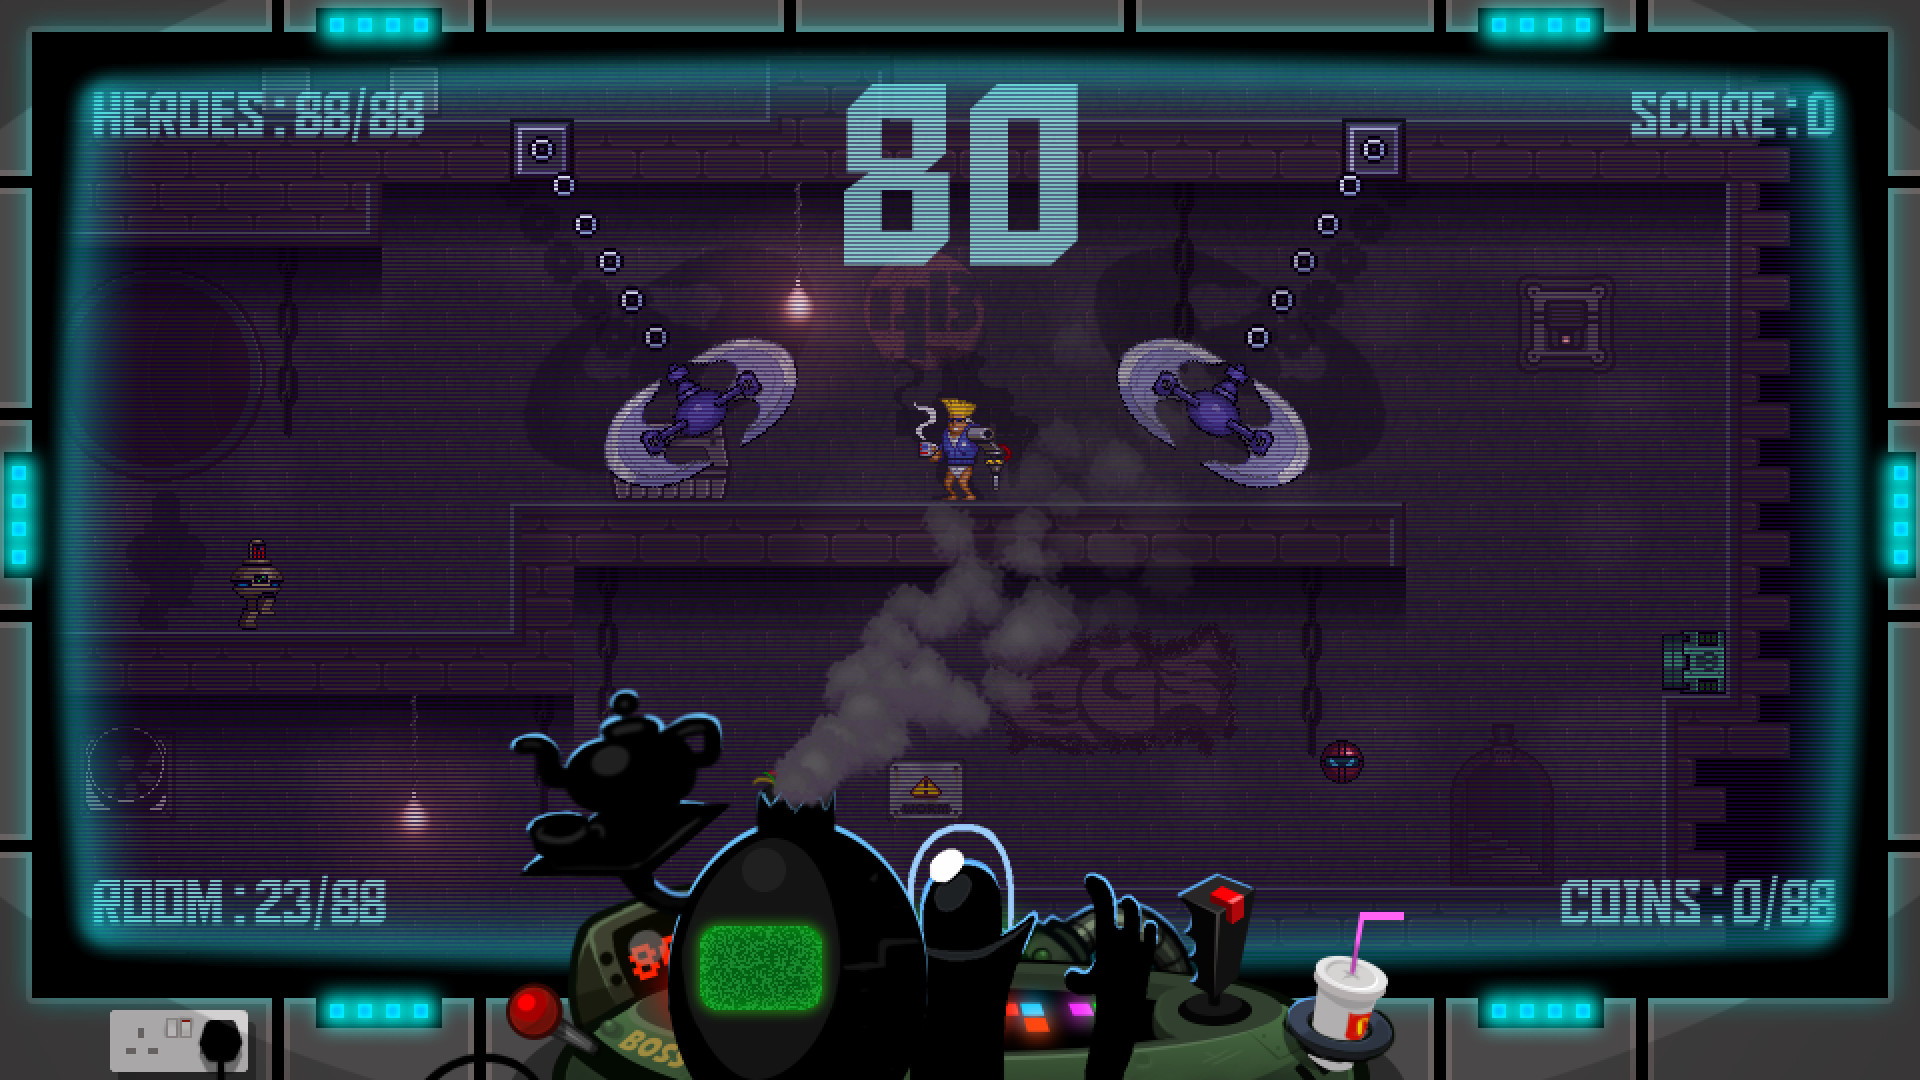 88 Heroes - screenshot 4